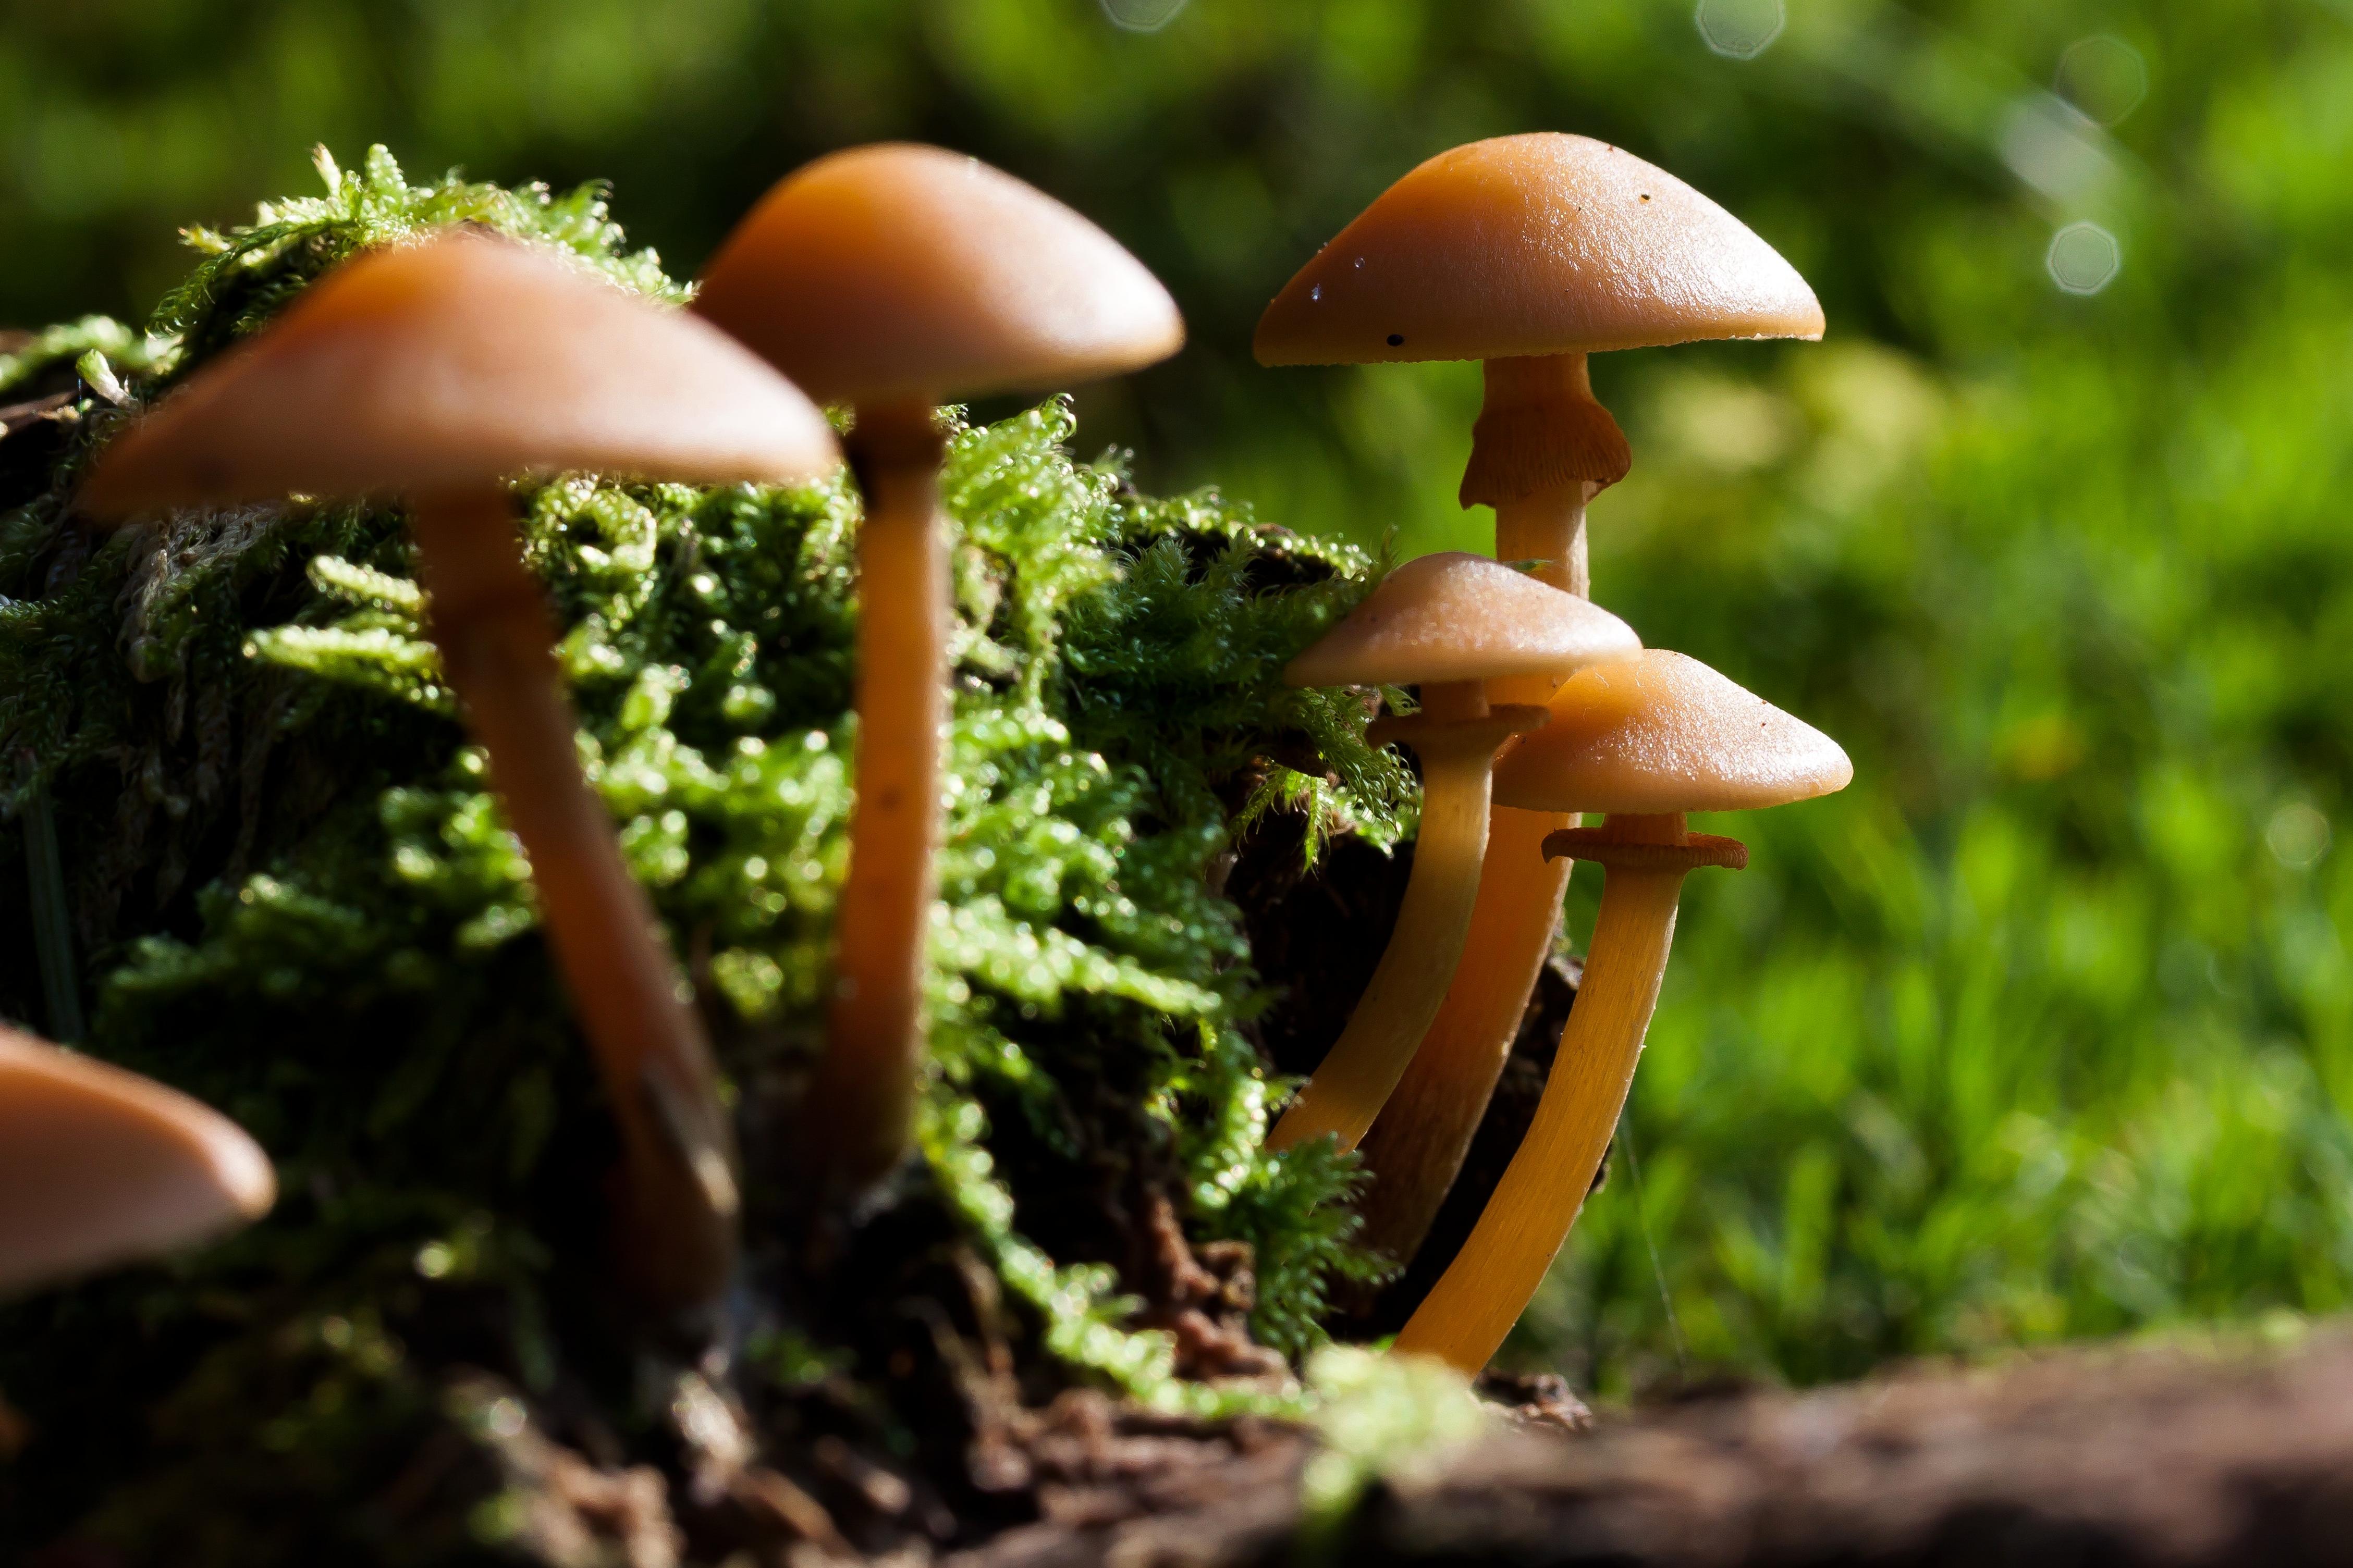 蘑菇 免费图片 - Public Domain Pictures